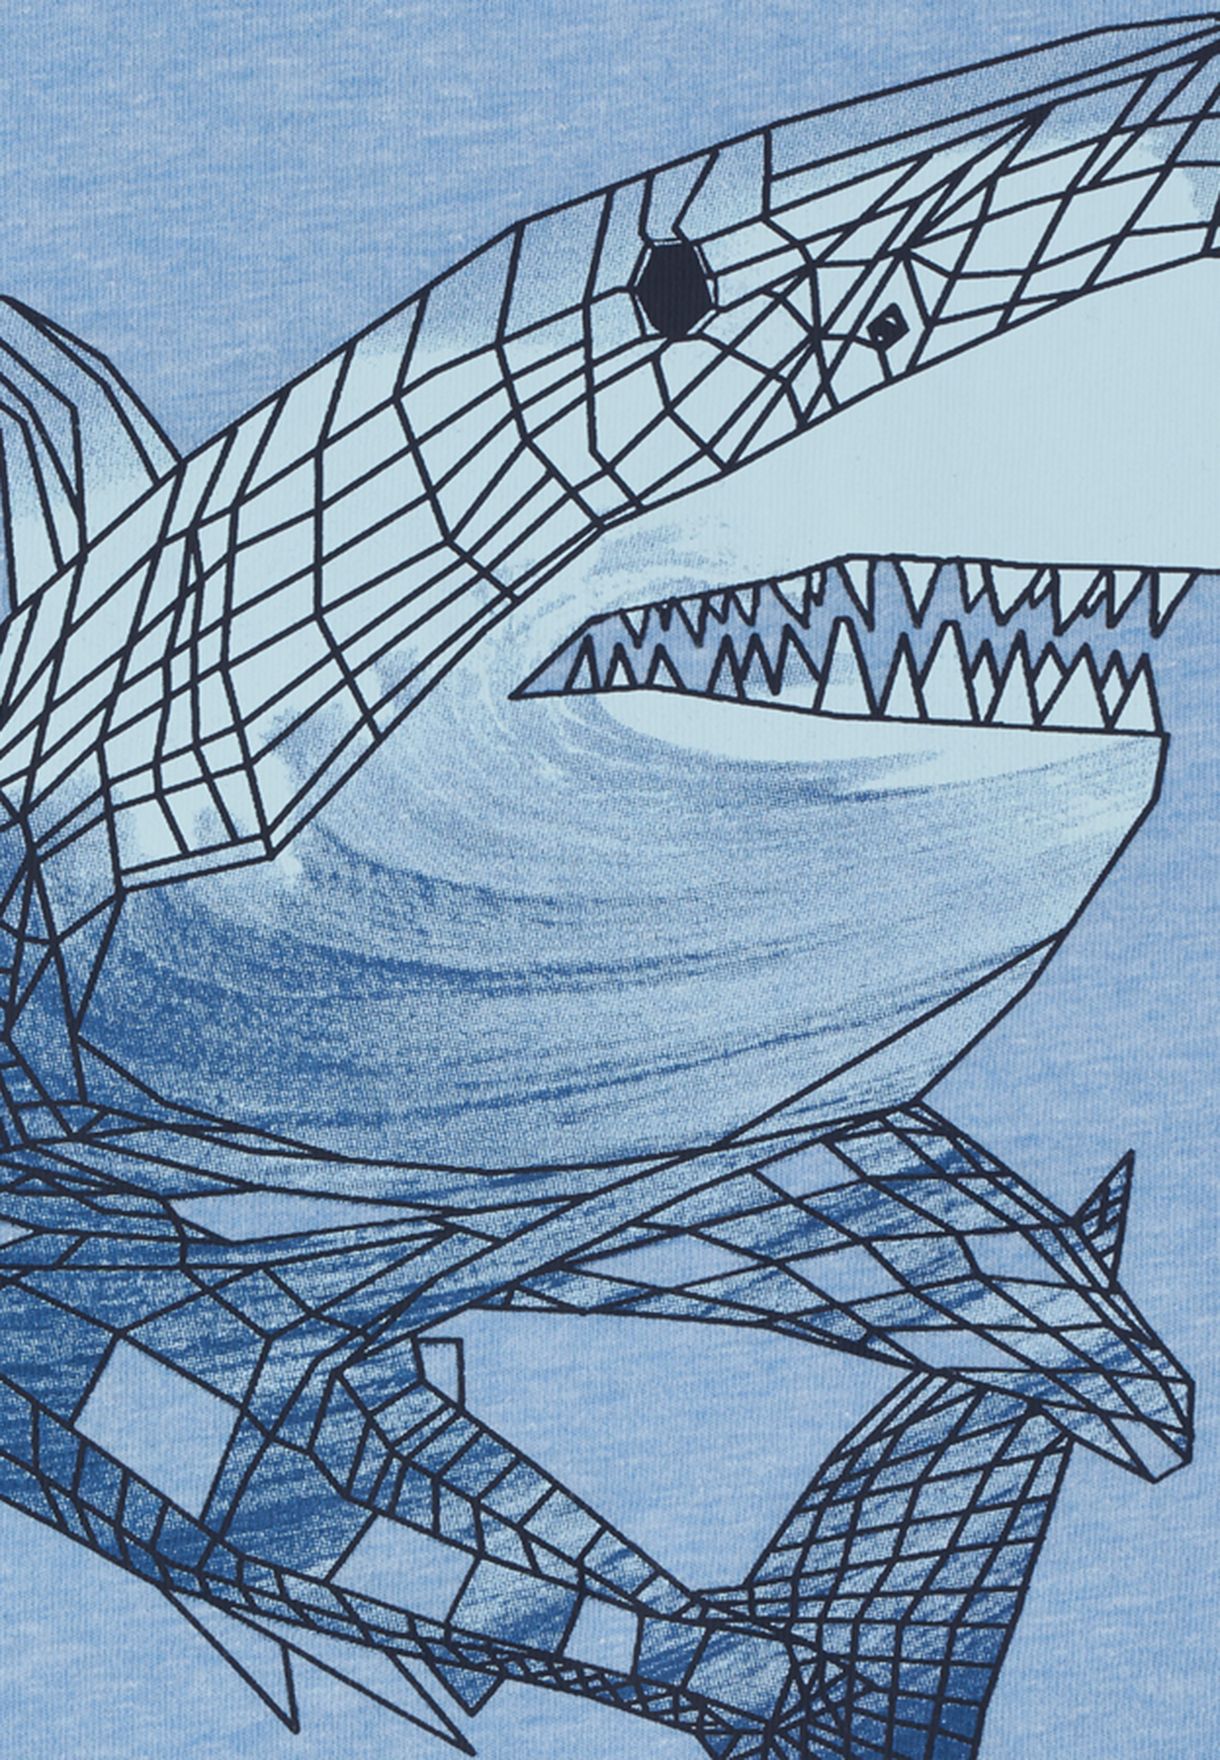 Kids Shark Print Vest